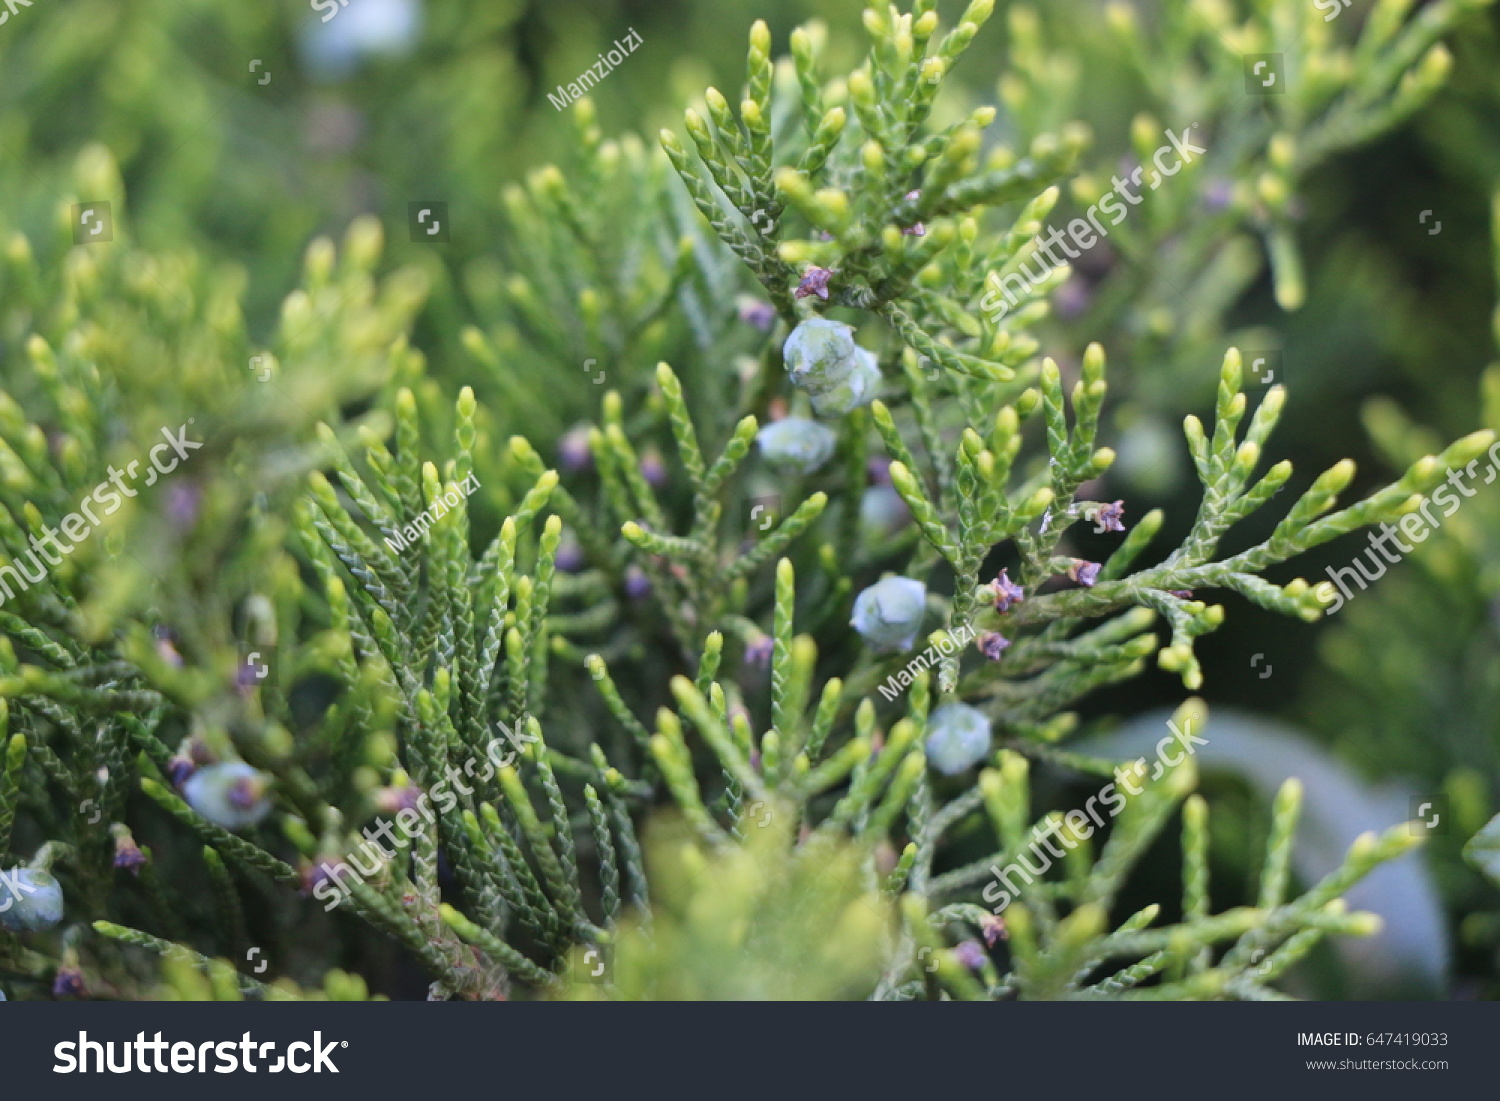 Evergreen Needles Young Cypress Texture Closeup Stock Photo 647419033 ...